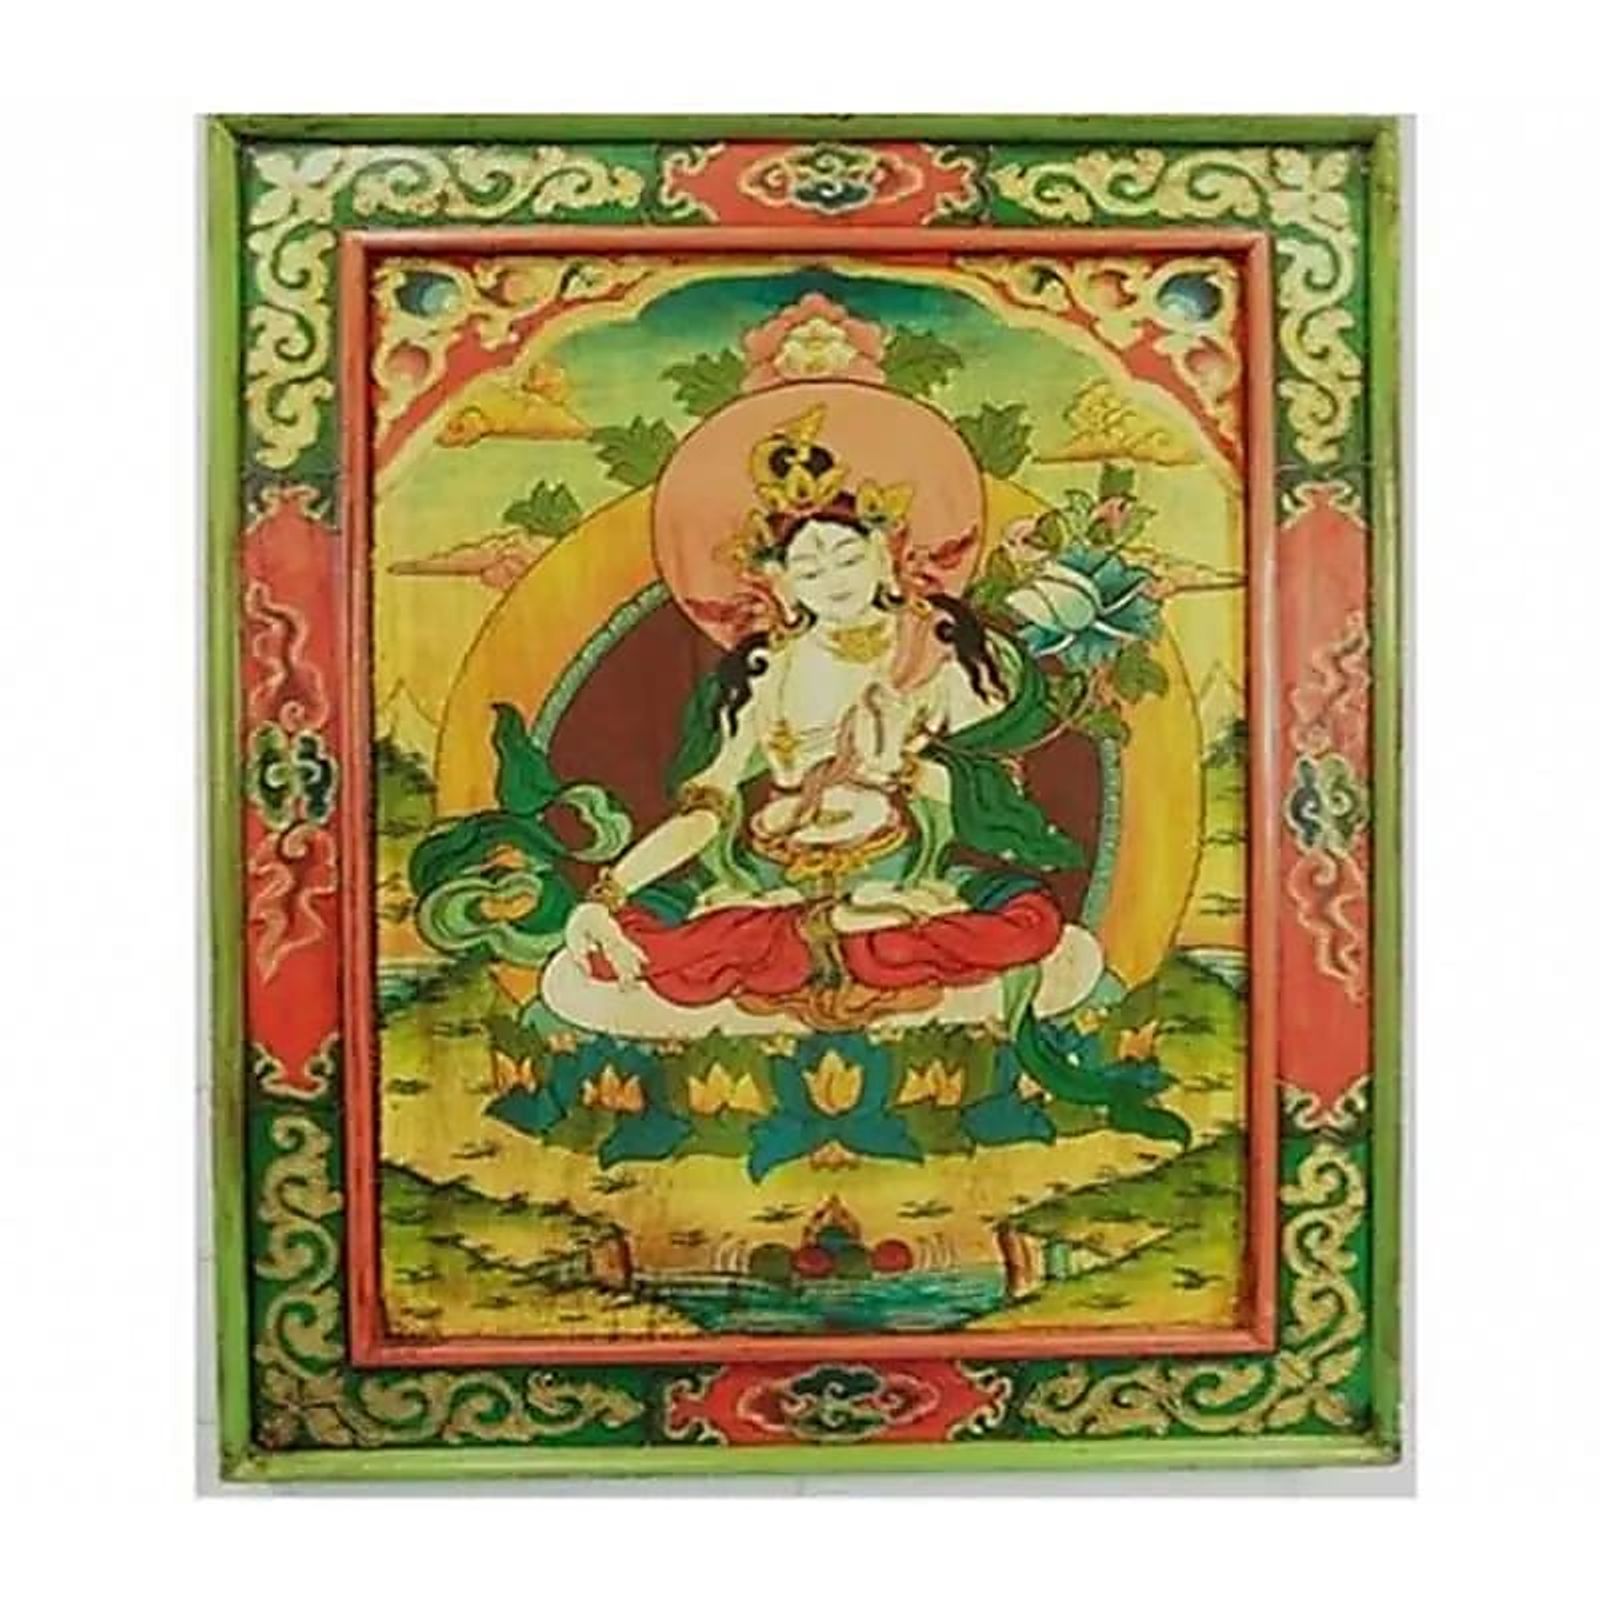 Weiße Tara handbemalte Thangka Holztafel -- 66x52 cm